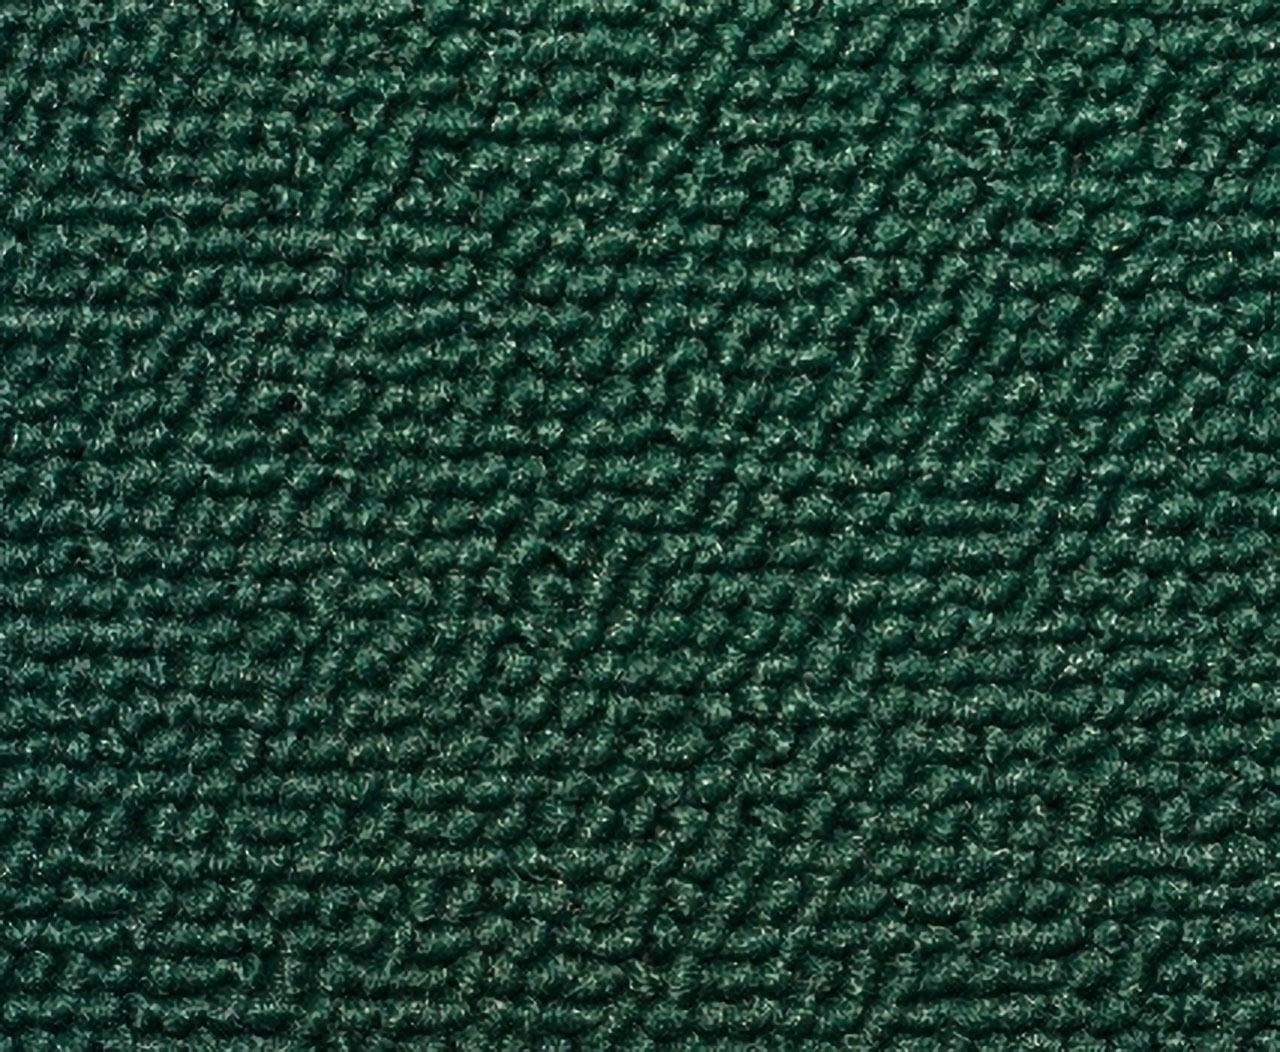 Holden Kingswood HJ Kingswood Panel Van 45X Jade Green Carpet (Image 1 of 1)